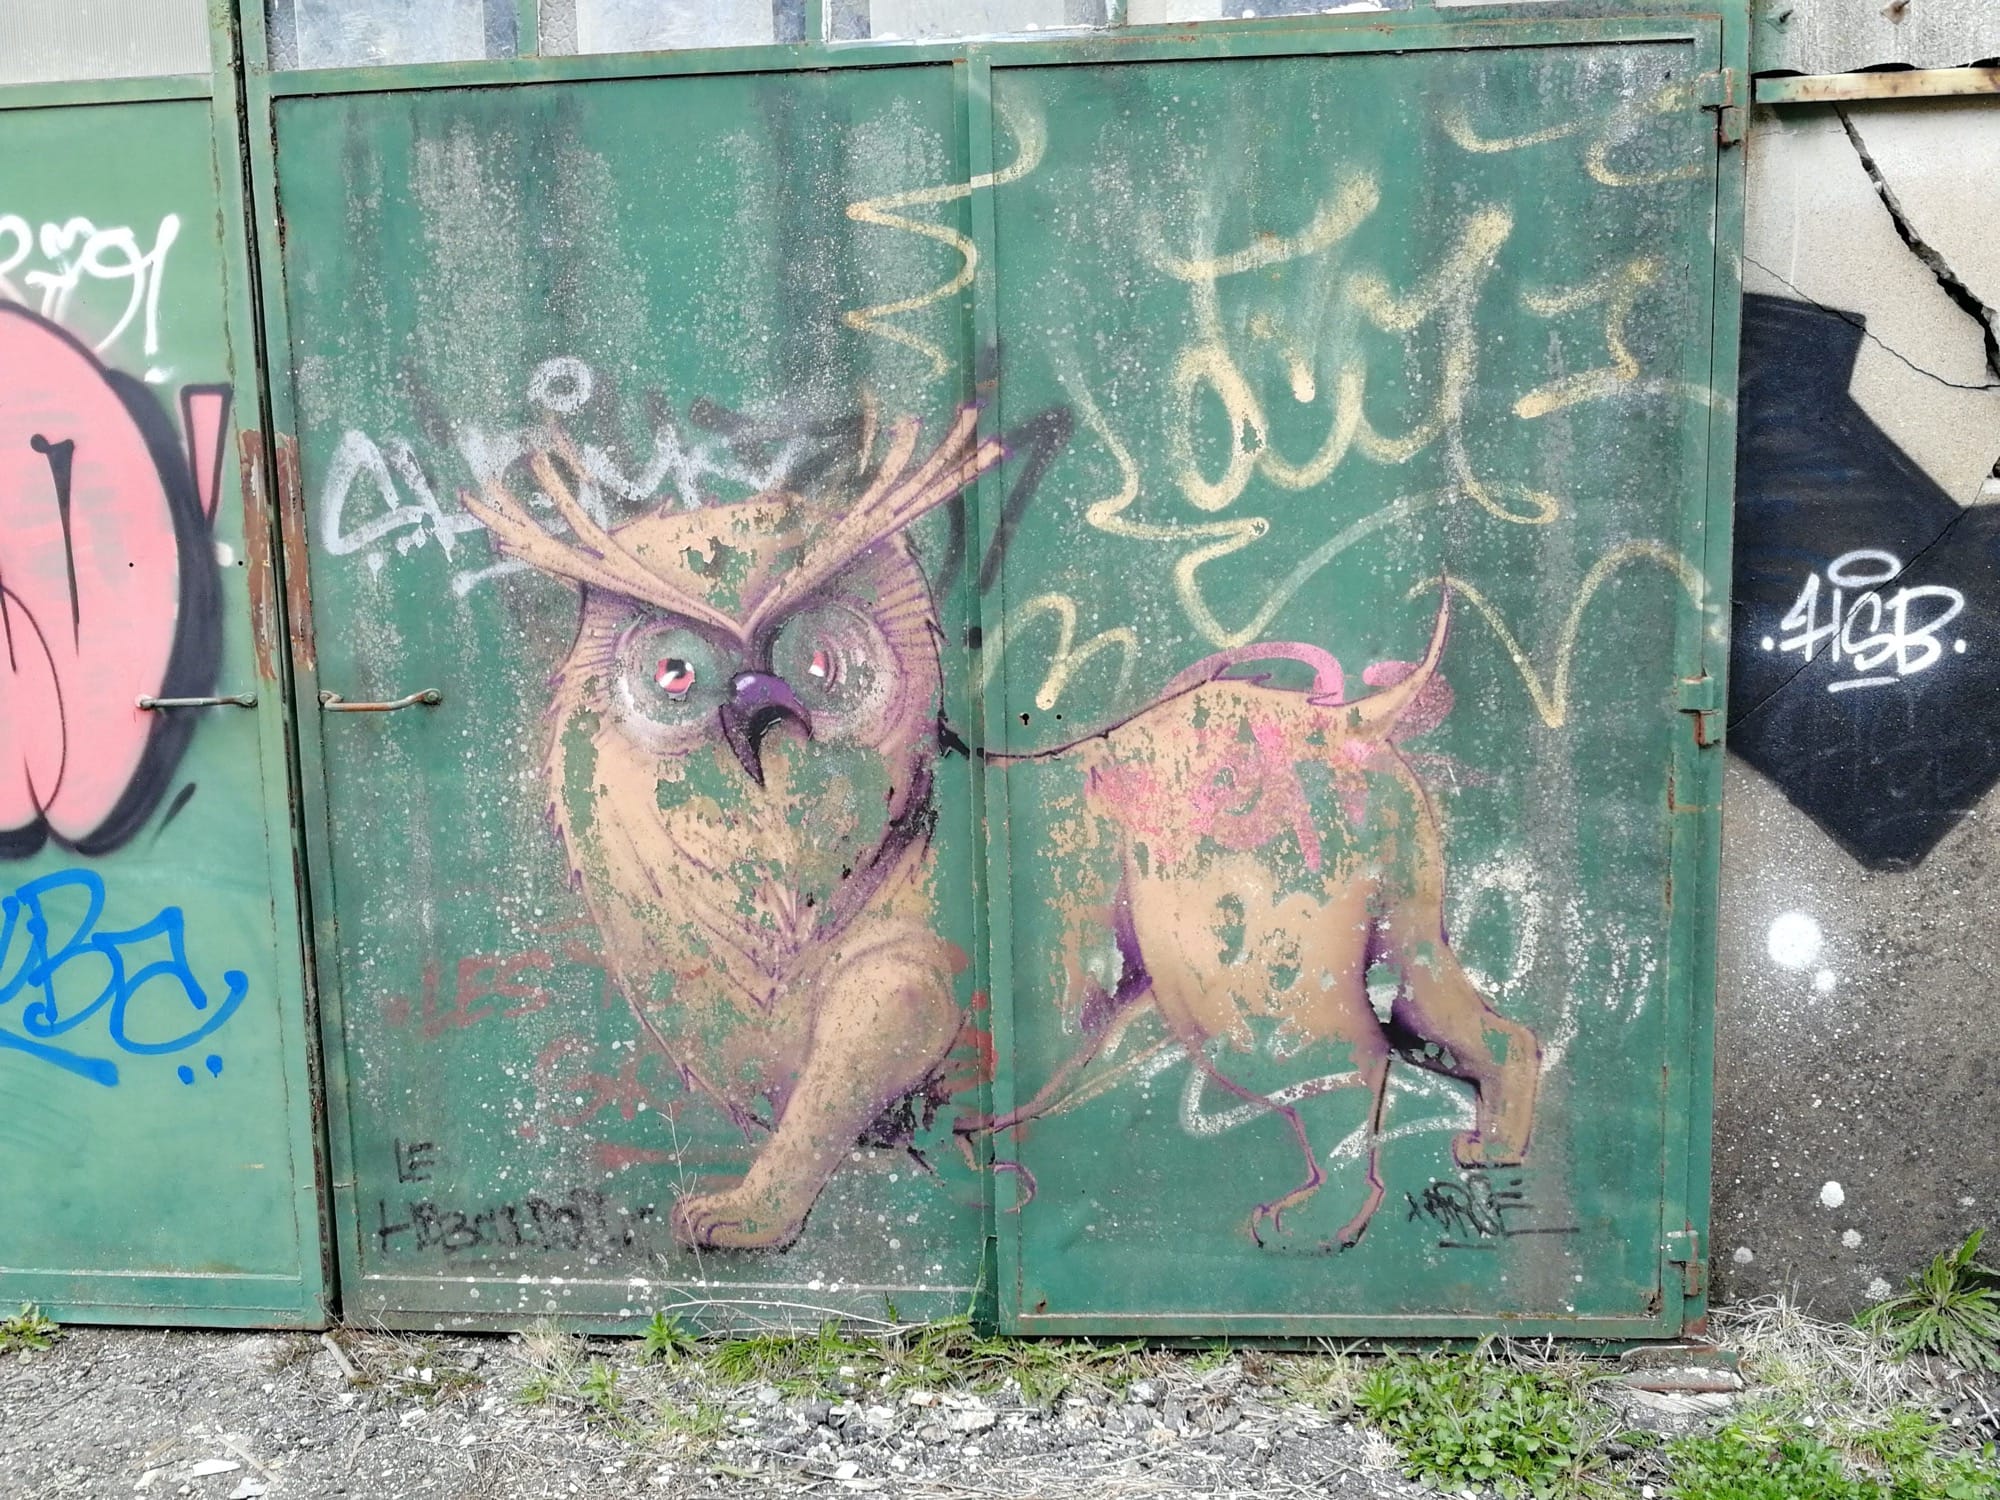 Graffiti 1359 Le hibou by the artist Kafé Korsé captured by Rabot in Issé France